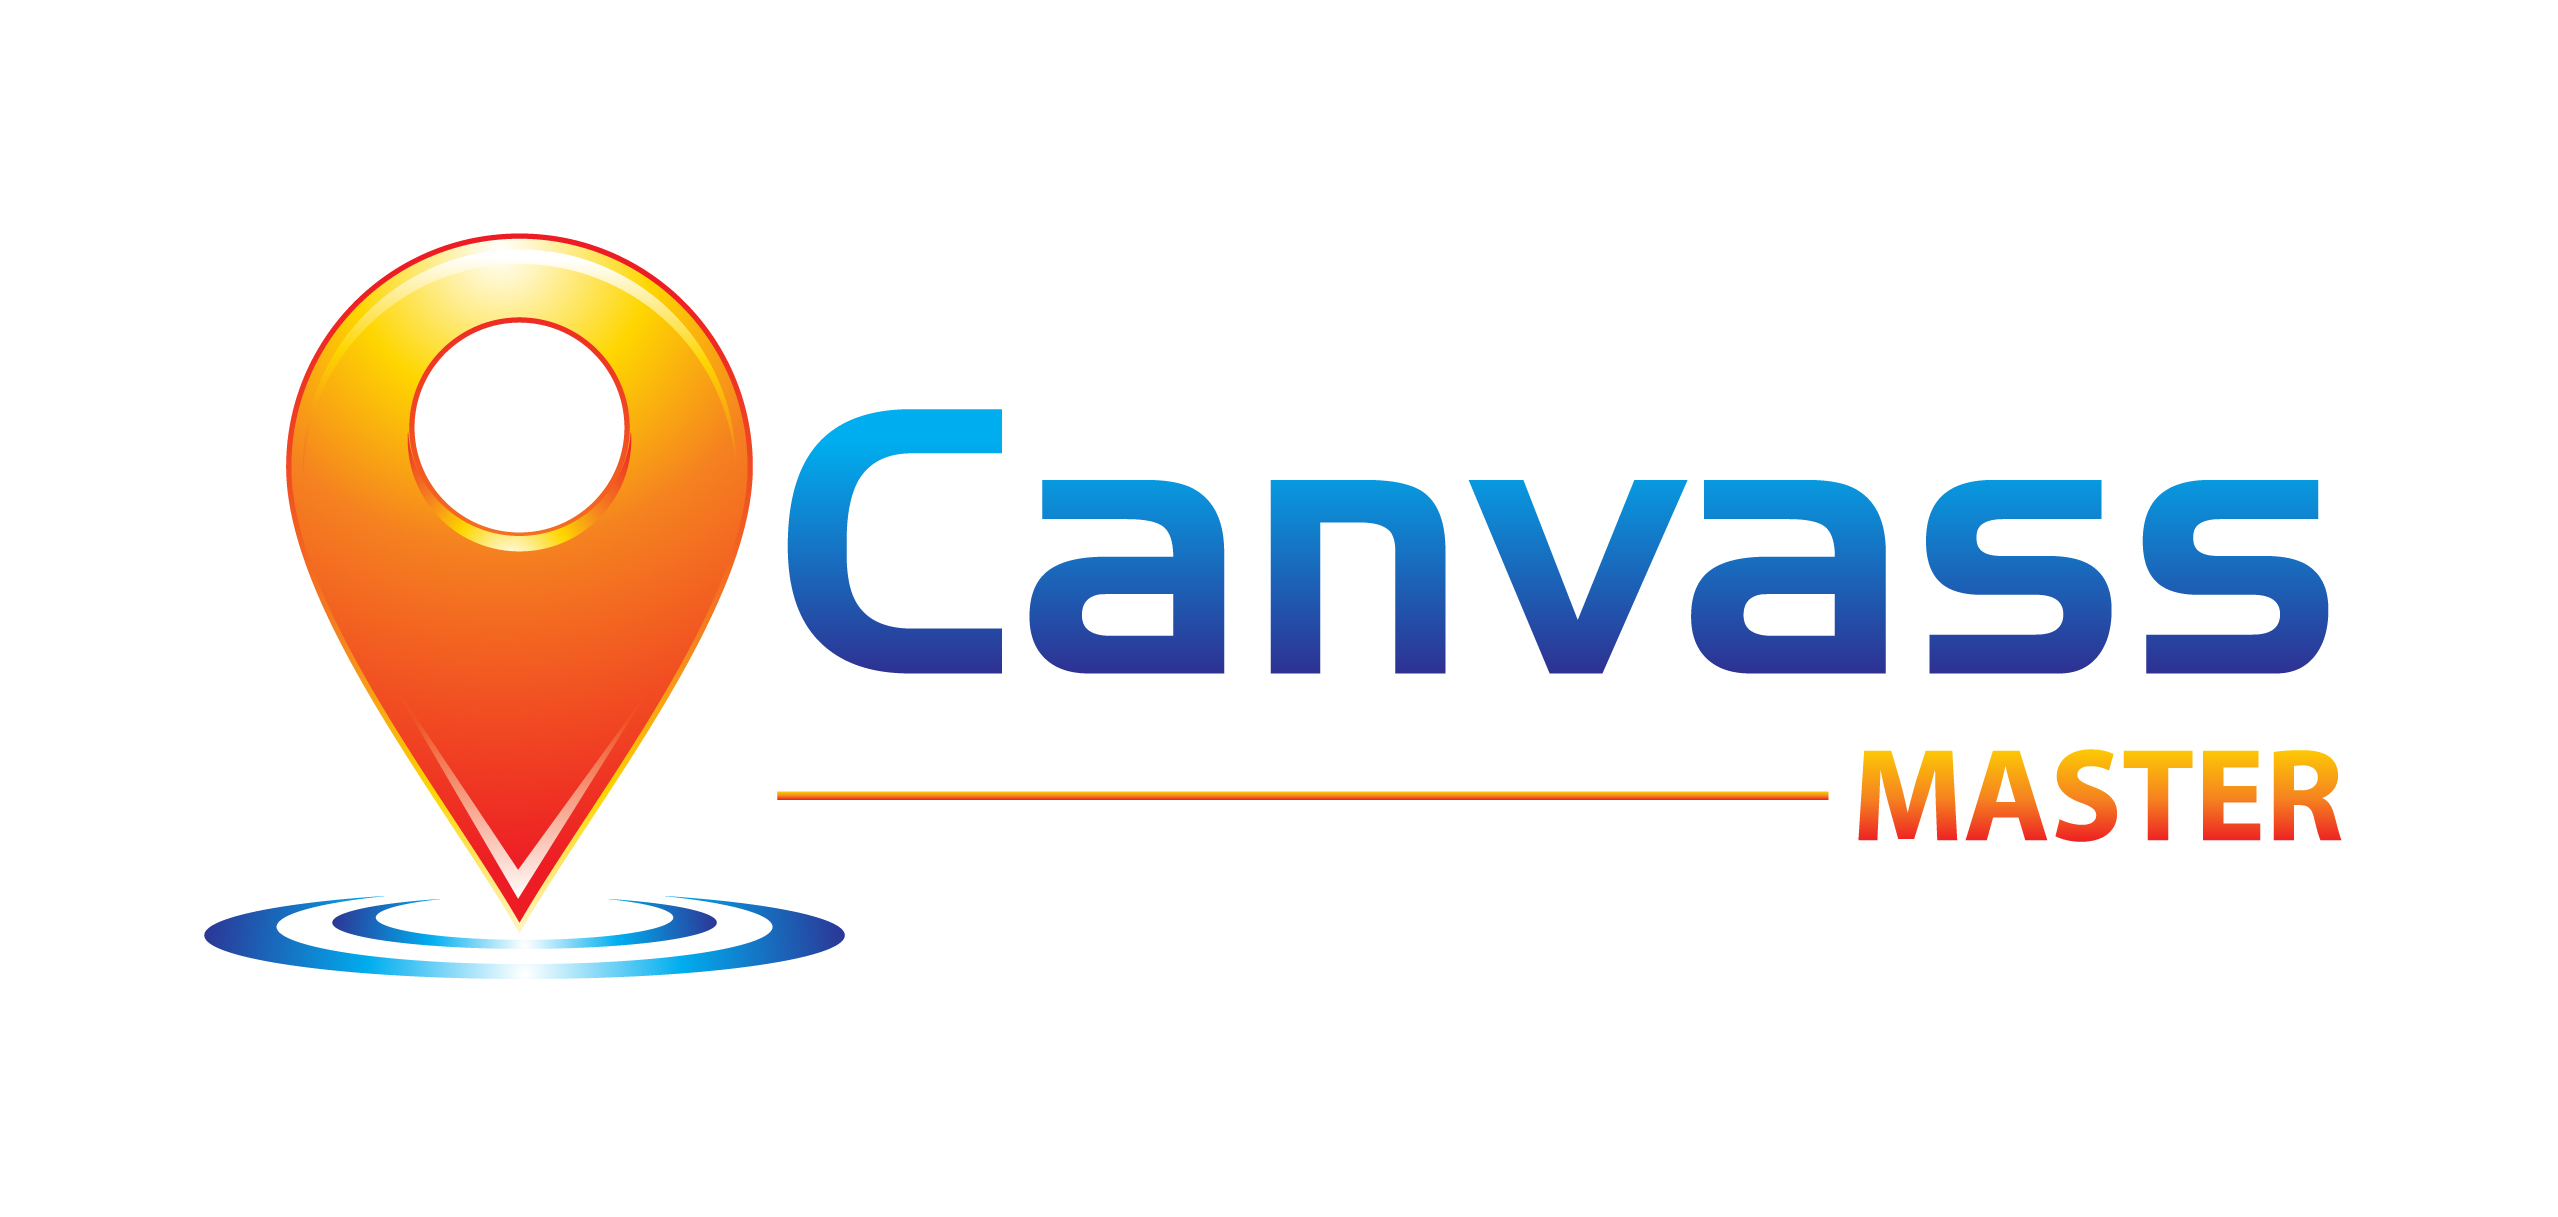 CanvassMaster